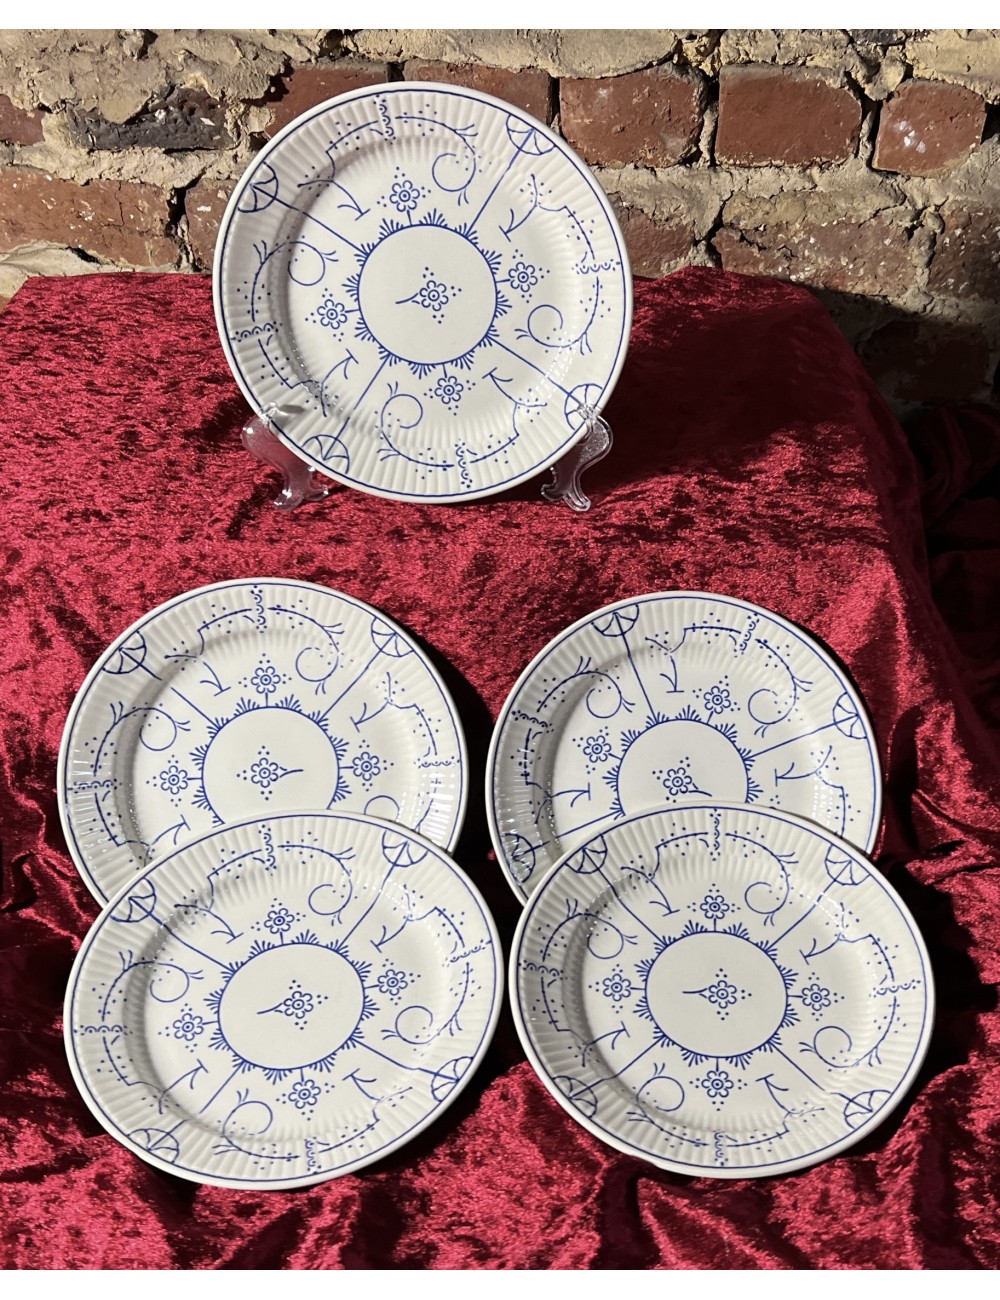 Breakfast plate / Dessert plate - Boch Keramis with black stamp - décor COPENHAGUE in blue